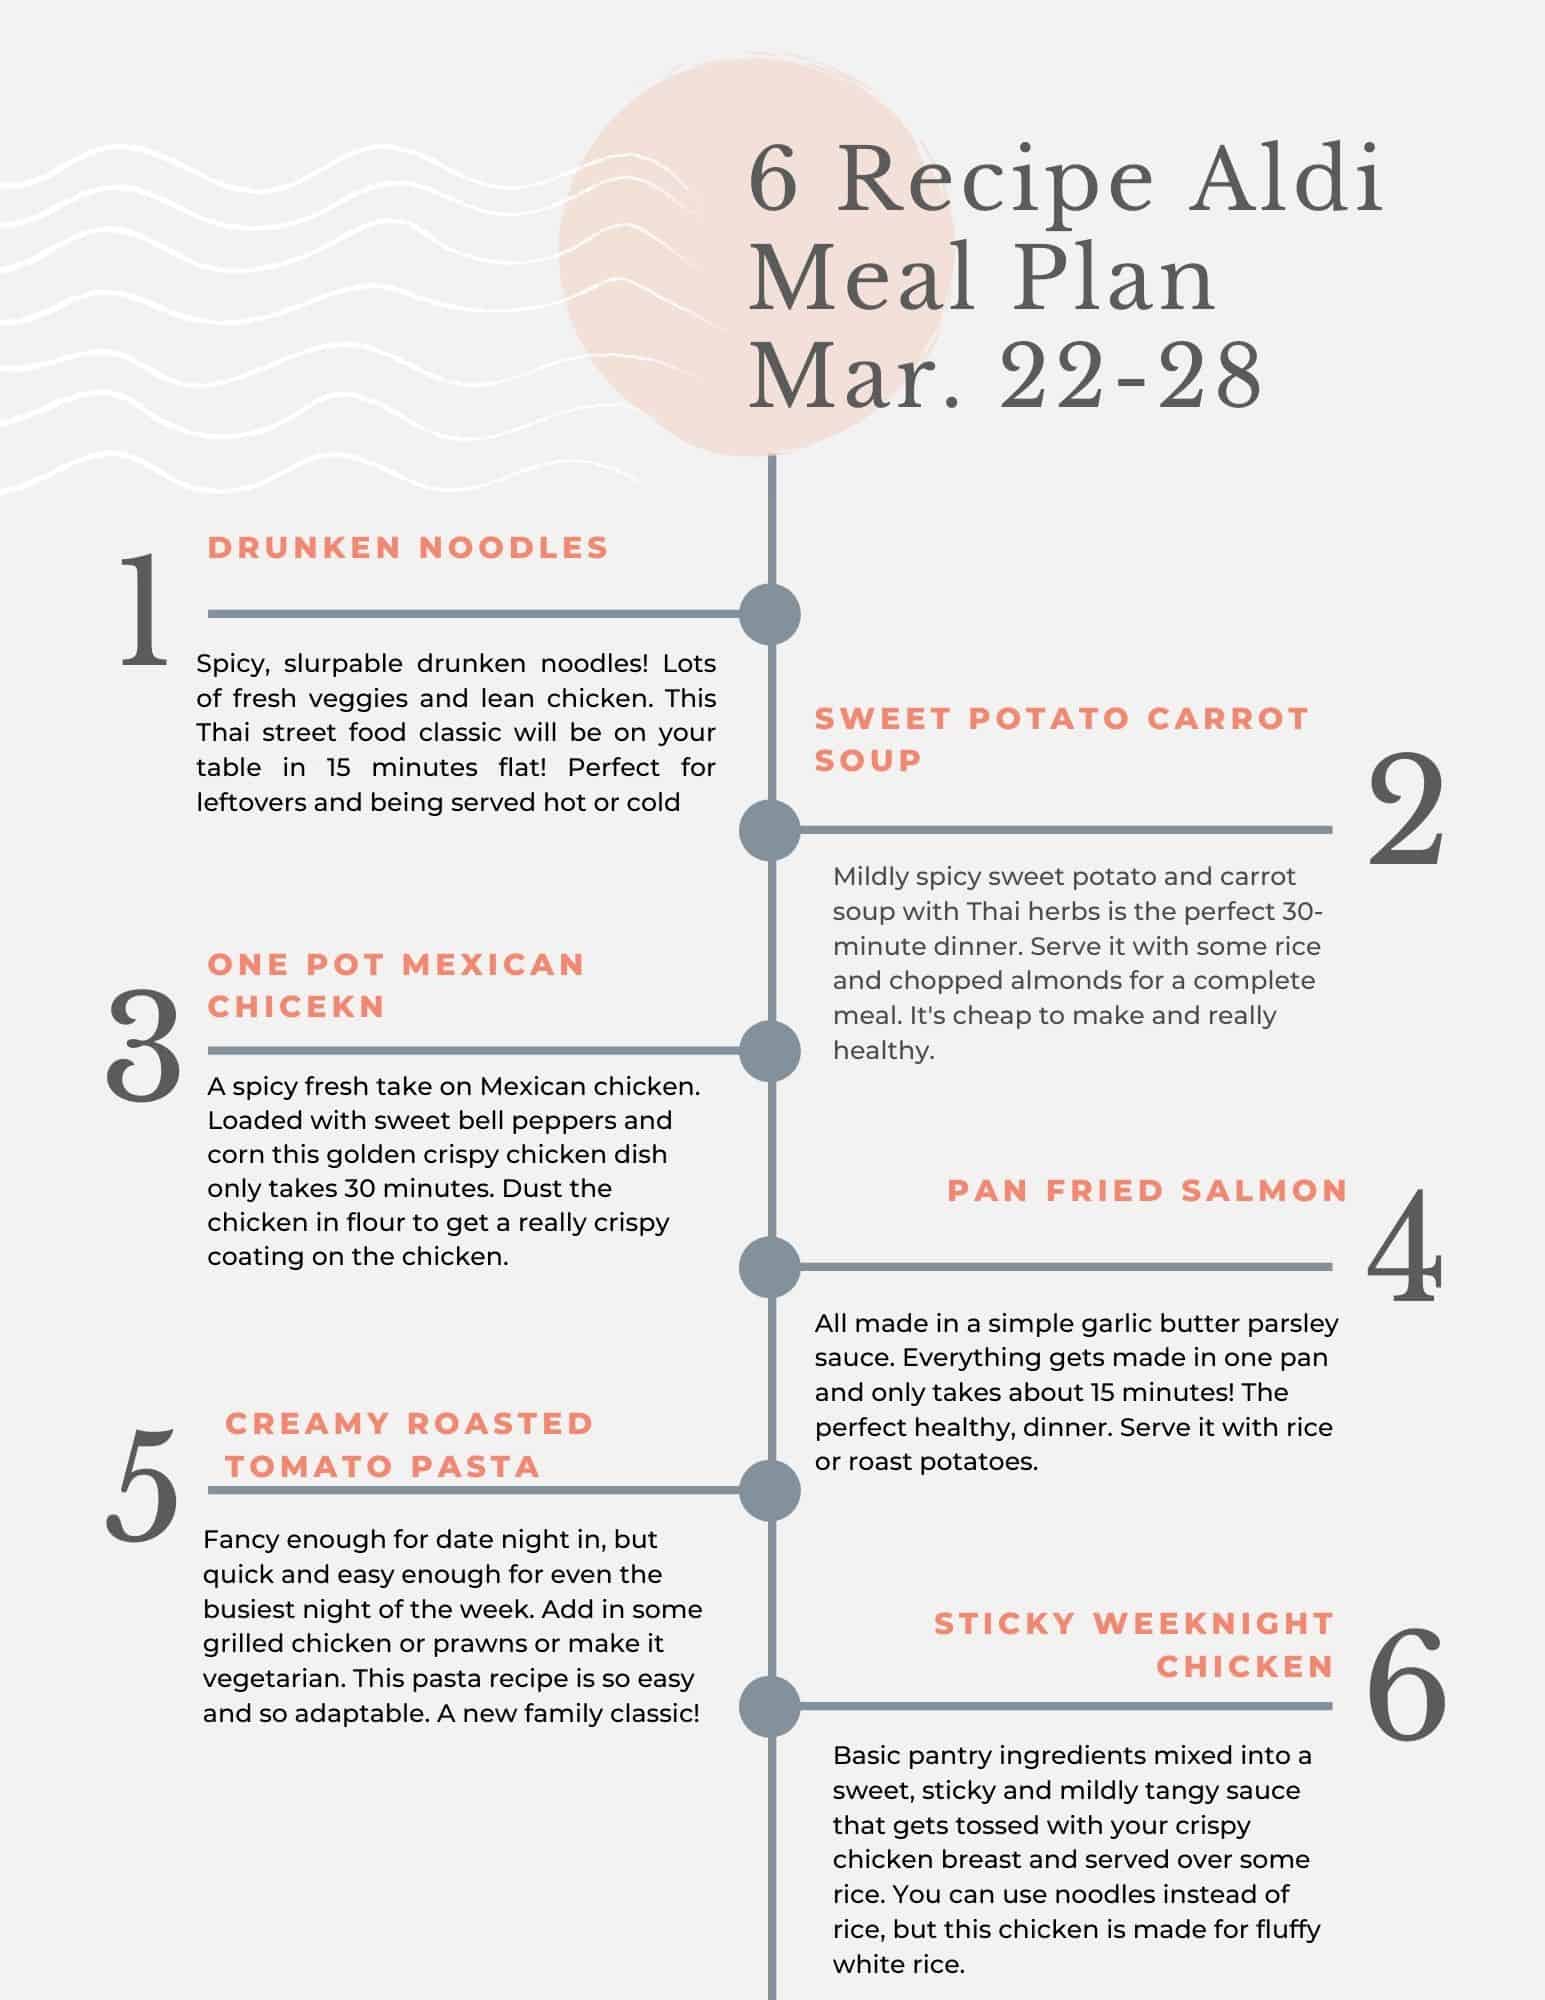 Aldi budget meal plan menu sheet.